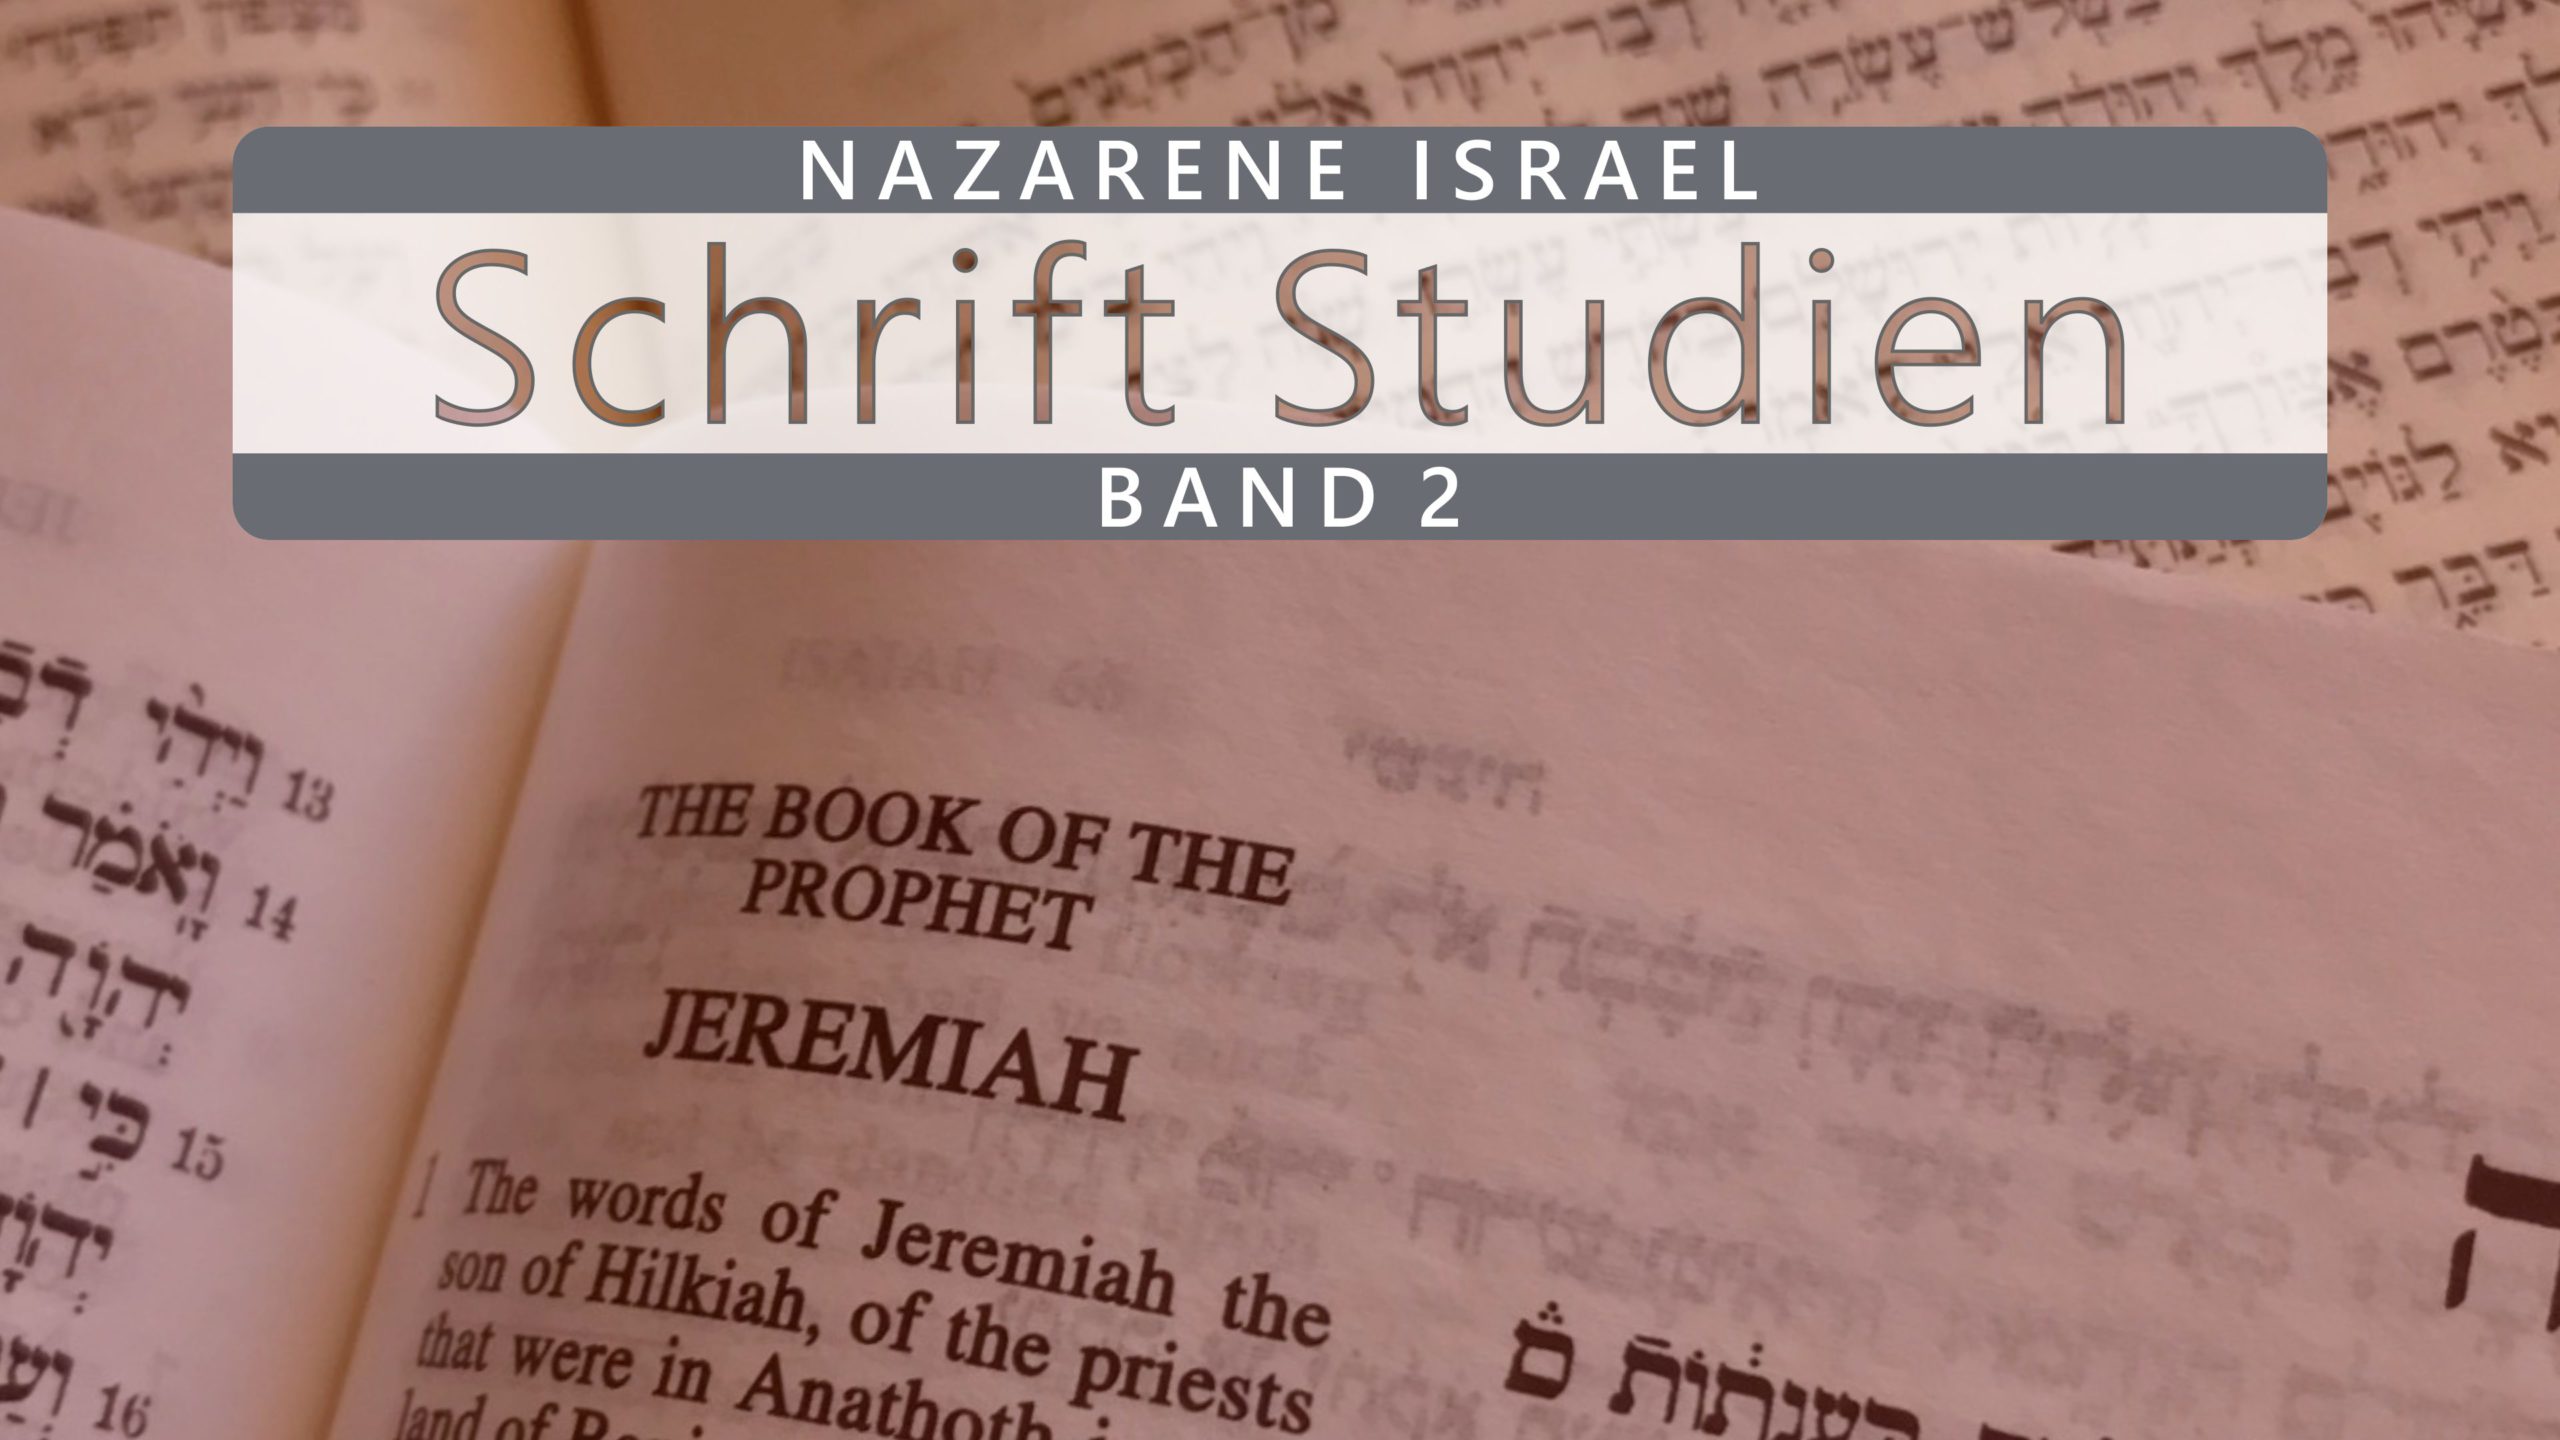 Nazarene Schrift Studien Band 2